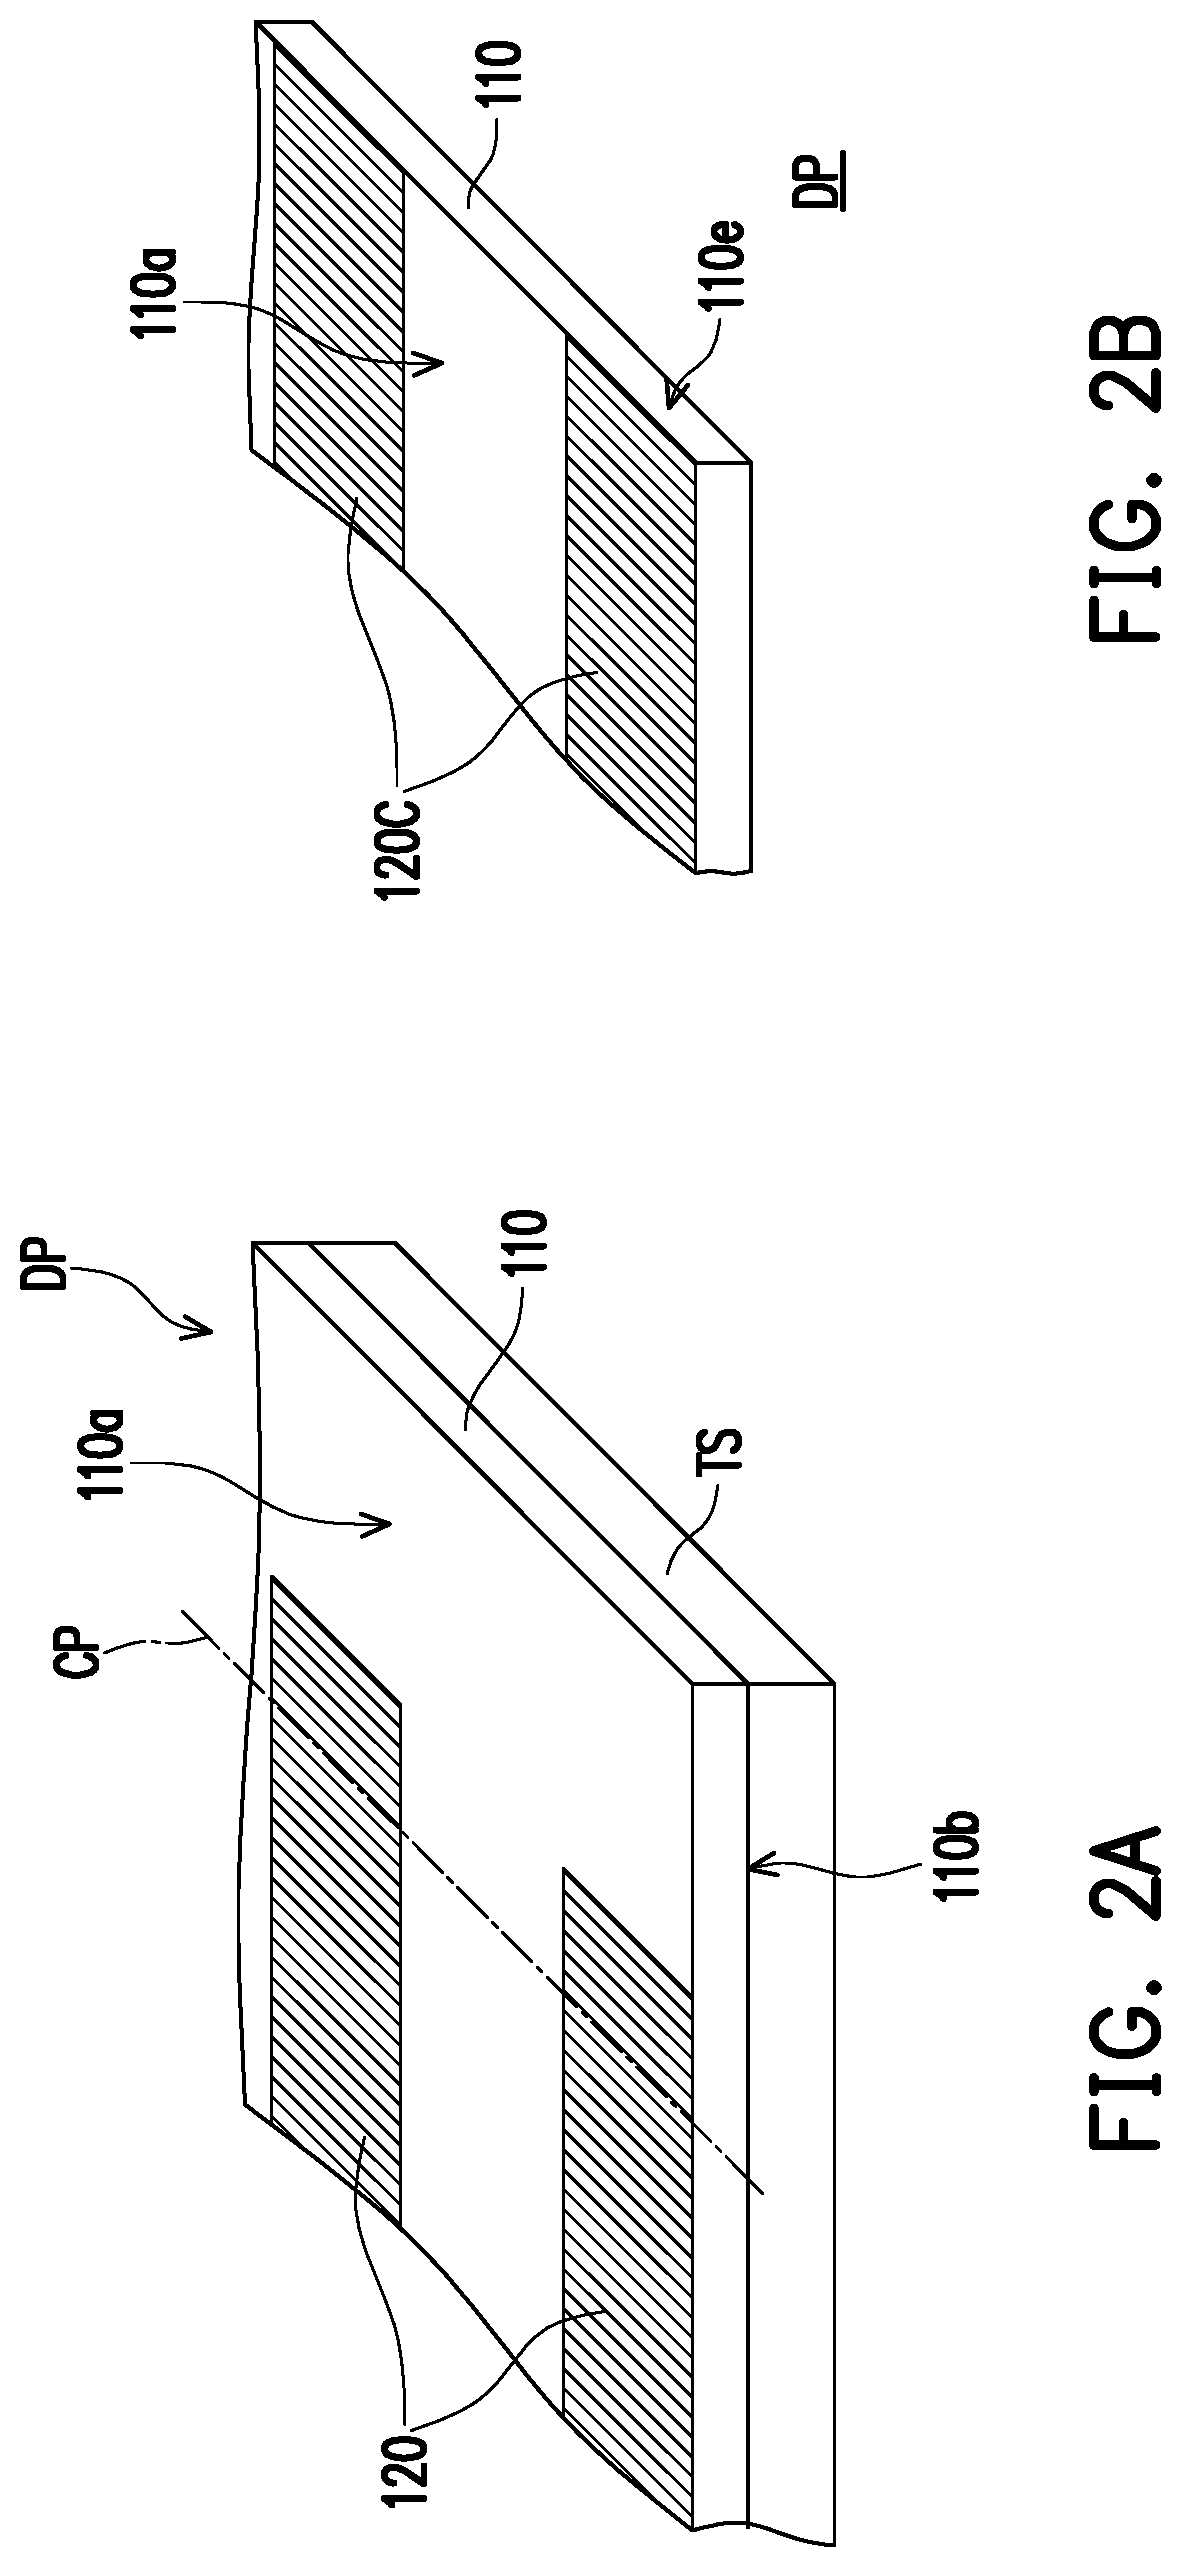 Display apparatus and method of fabricating the same